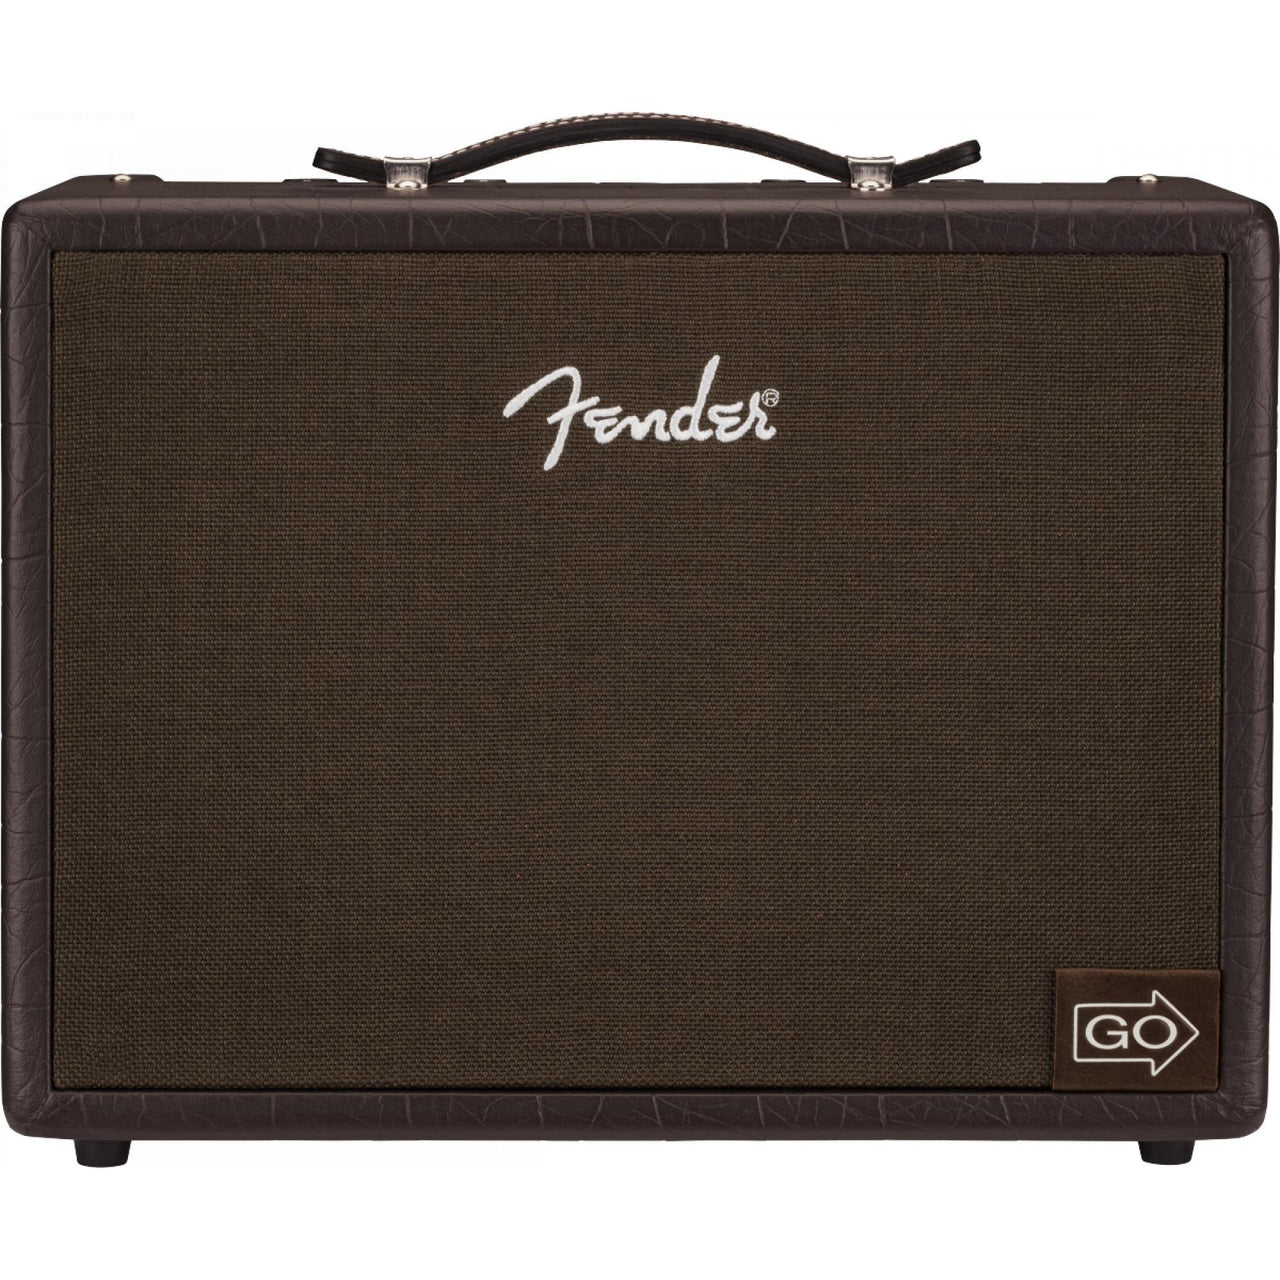 Amplificador Fender Acoustic Jr Go Para Guitarra acústico-eléctrica 2314400000